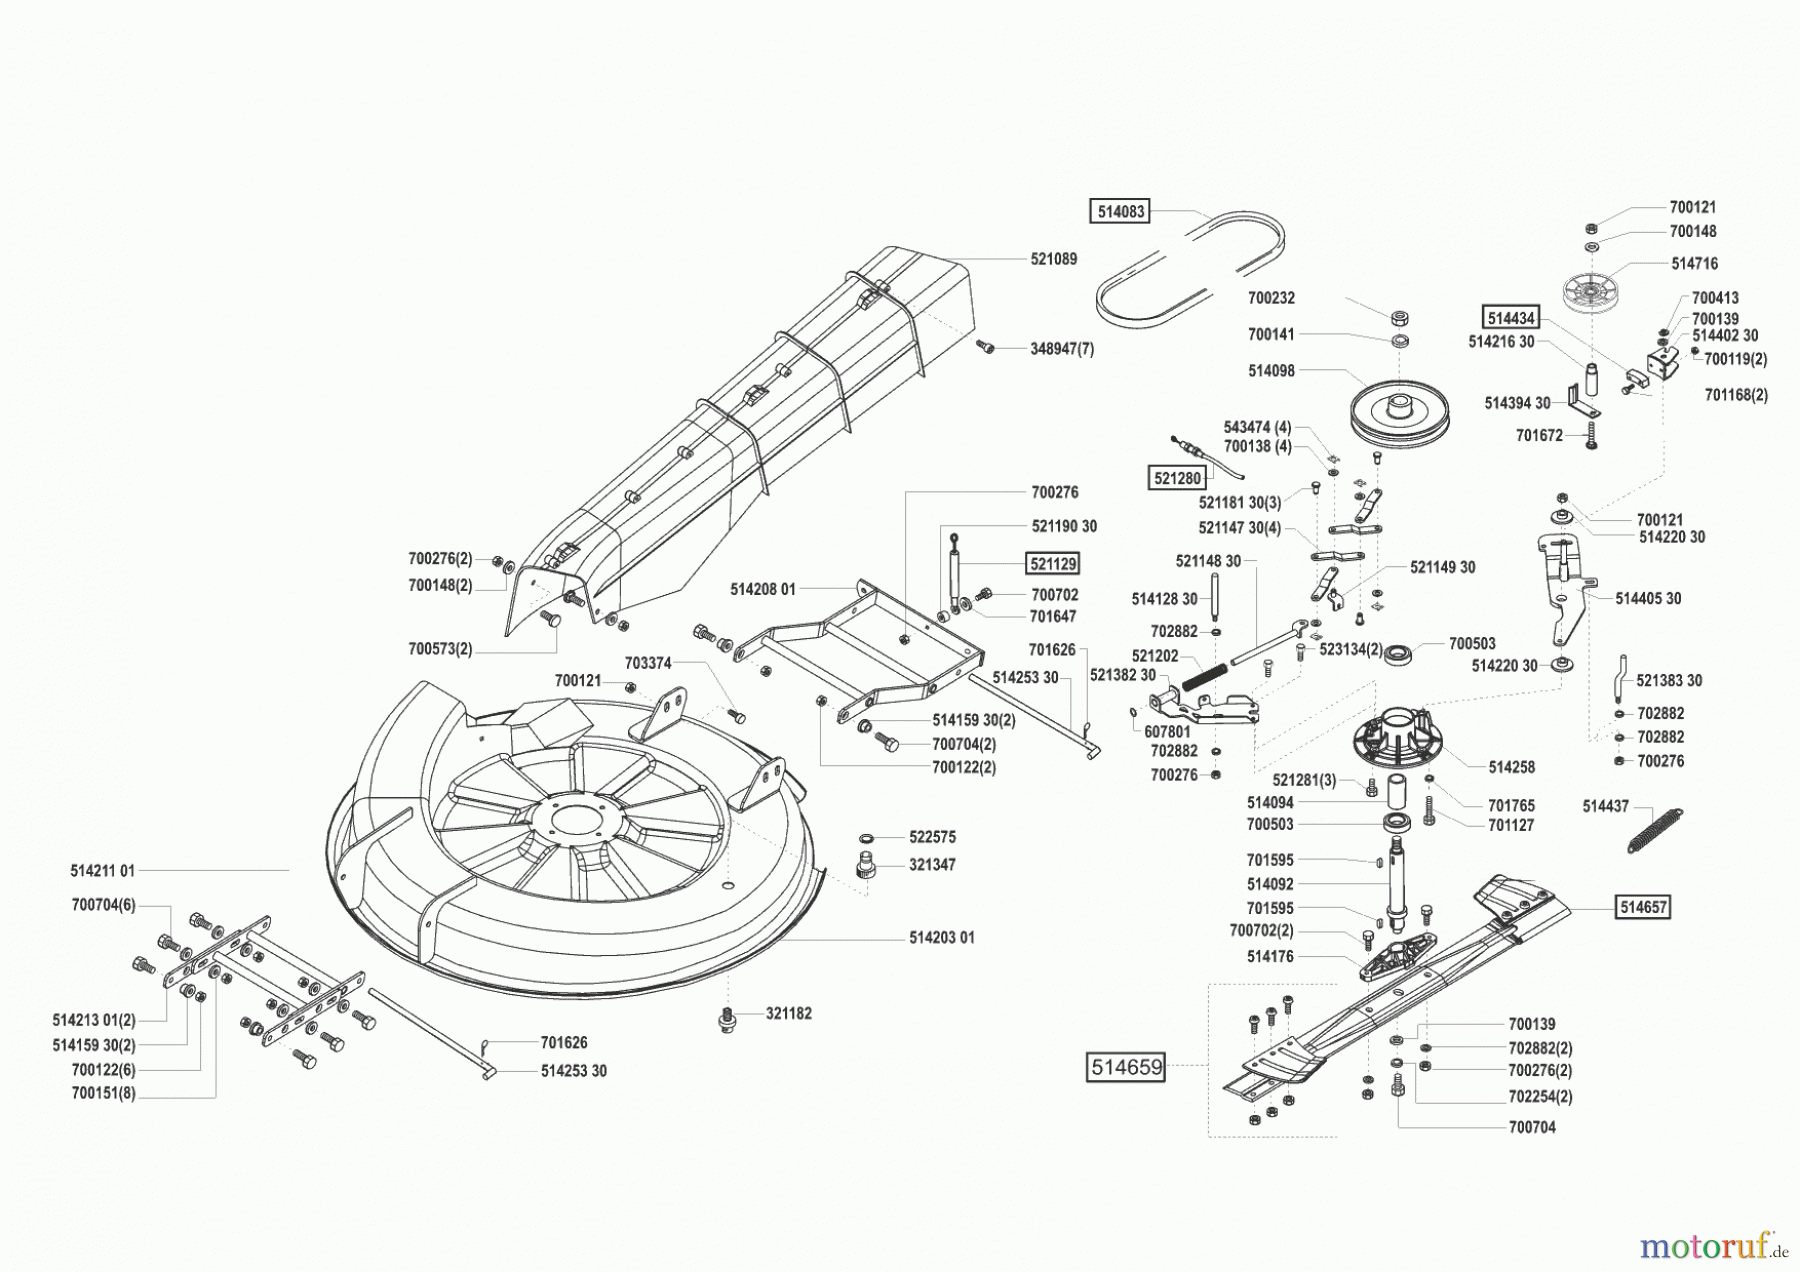  AL-KO Gartentechnik Rasentraktor T-800 SA ab 06/2002 Seite 5